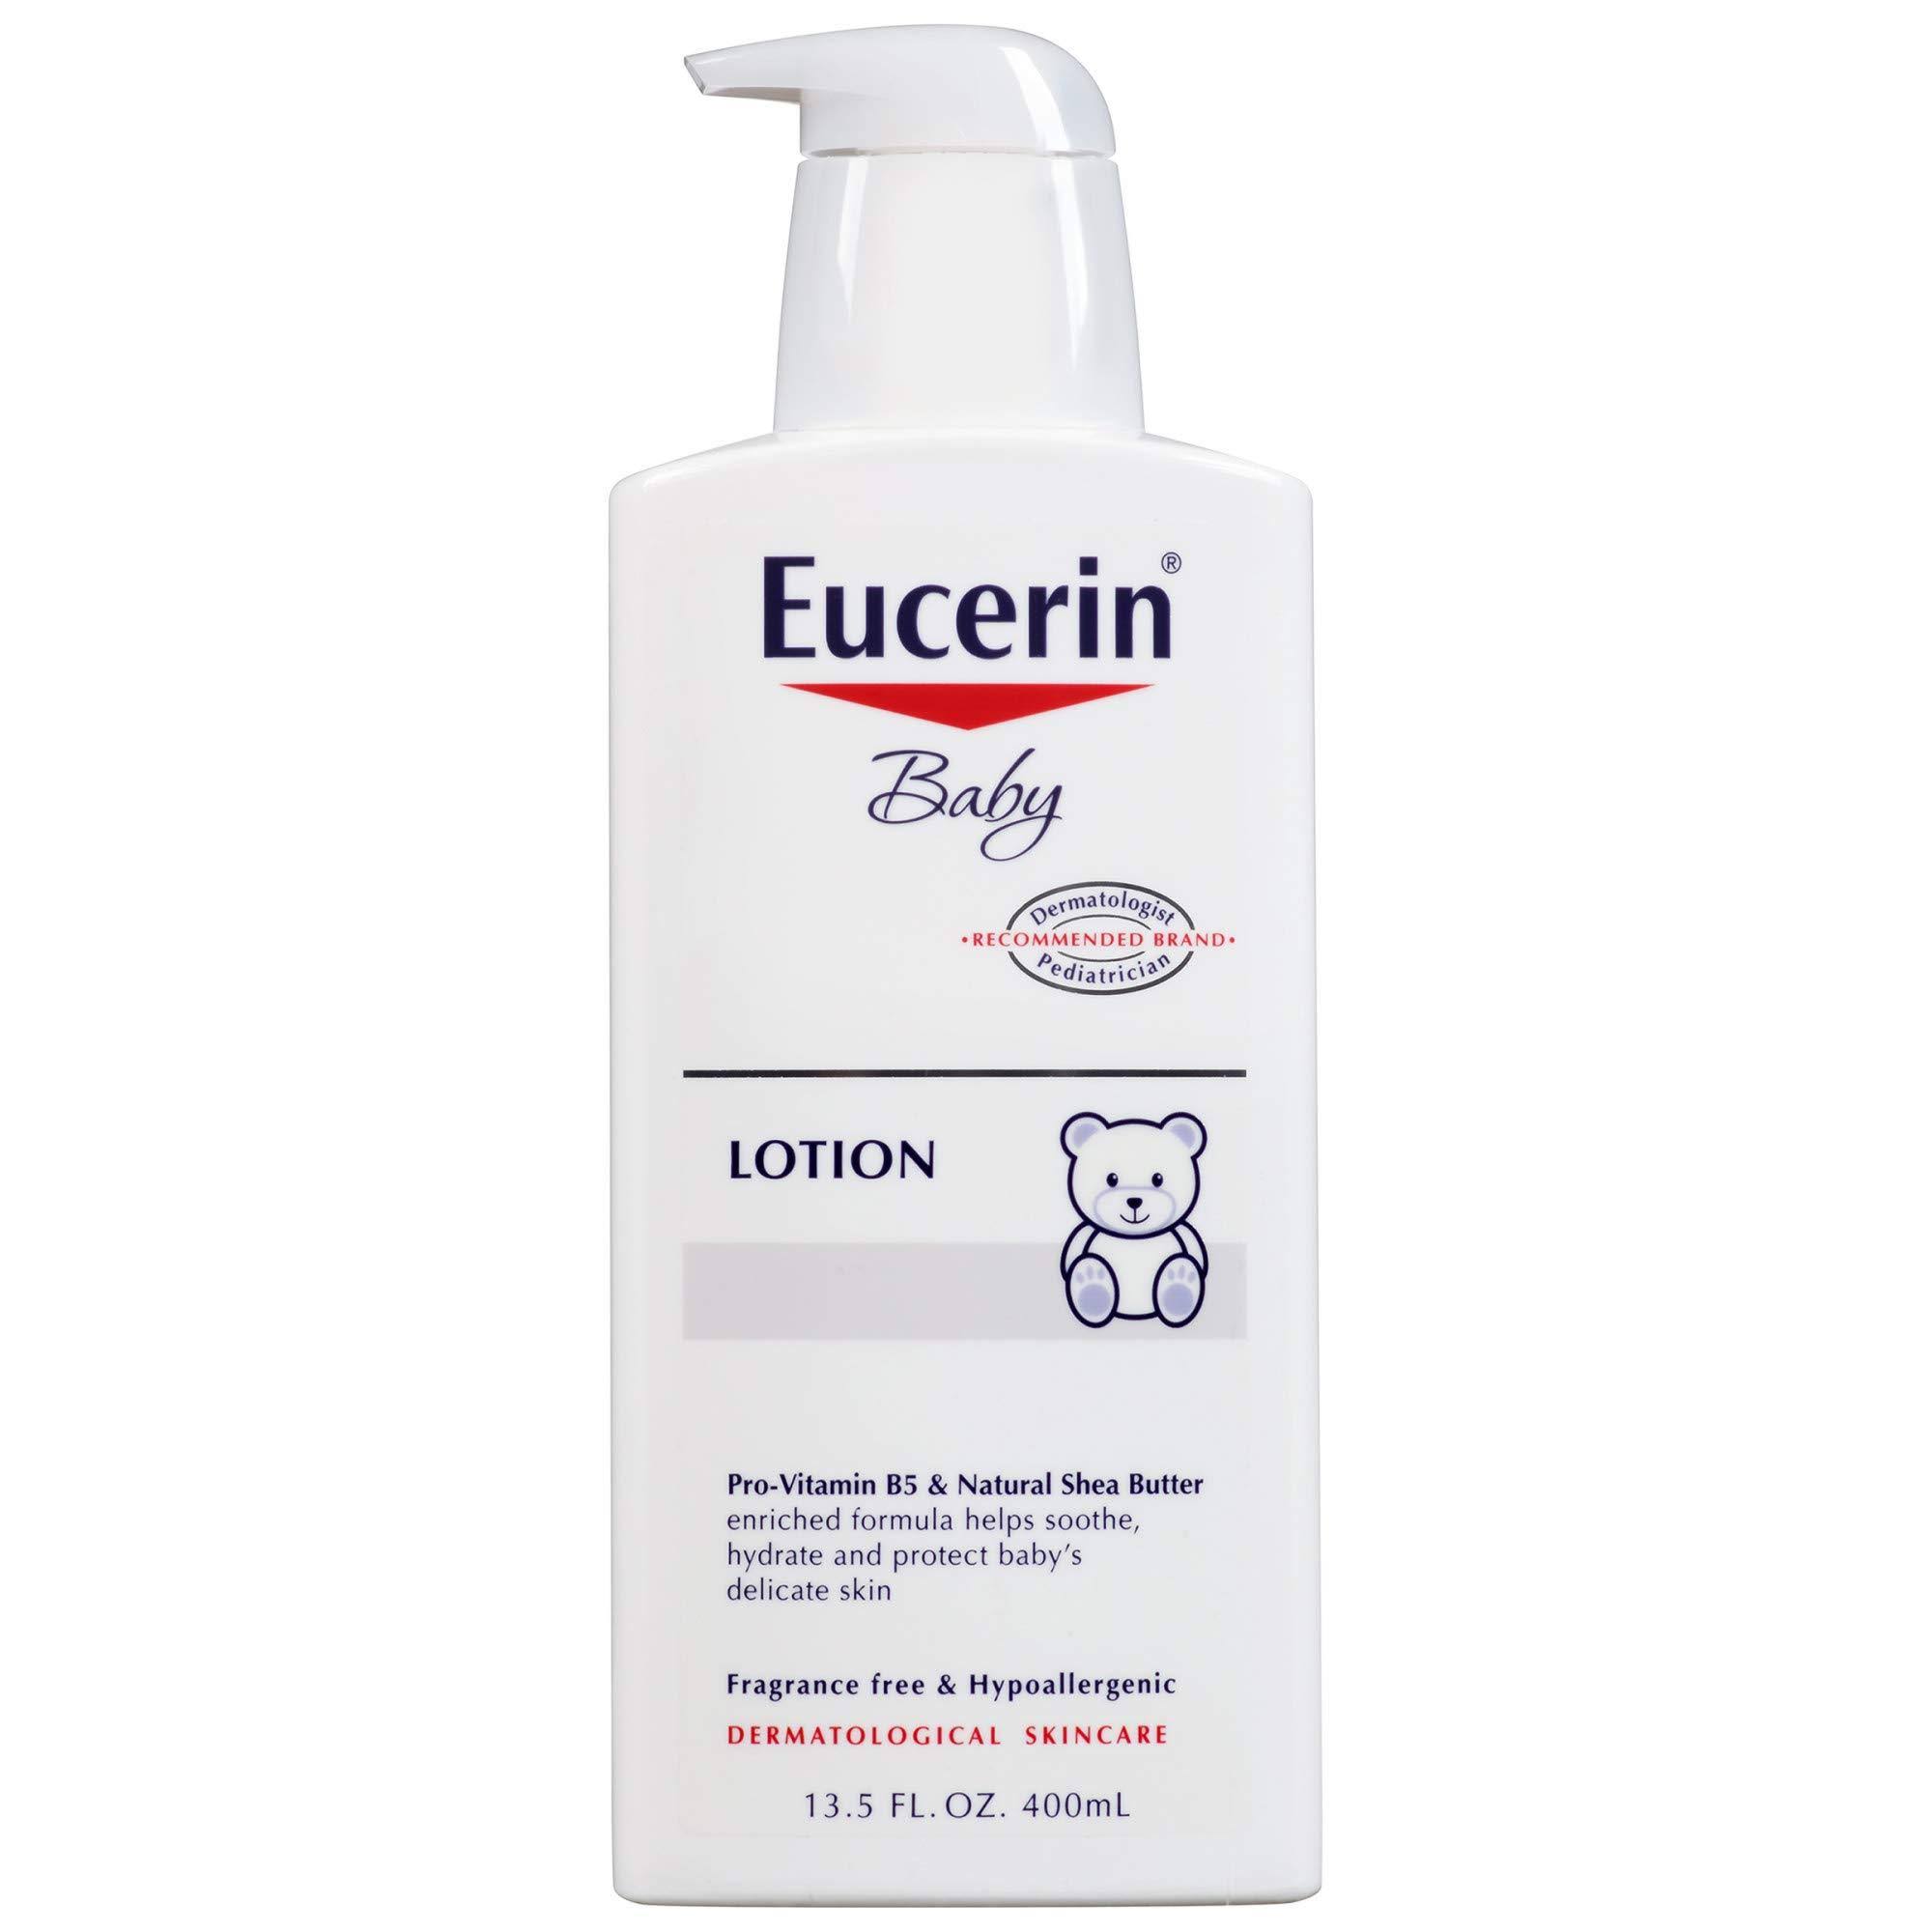 Eucerin Baby Pro-Vitamin B5 and Natural Shea Butter Lotion - 13.5oz